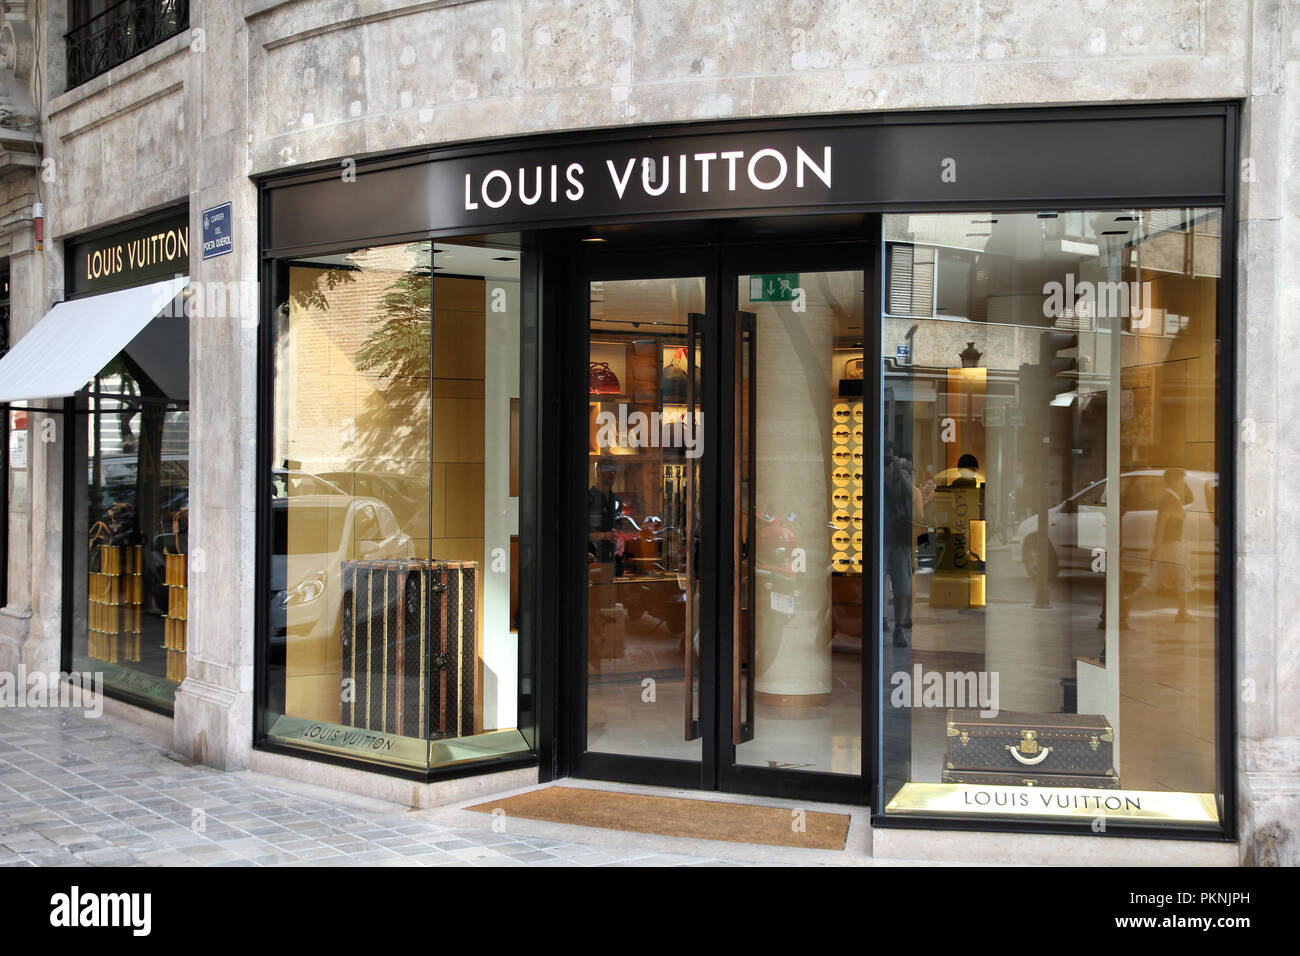 Telefono Tienda Louis Vuitton Valencia